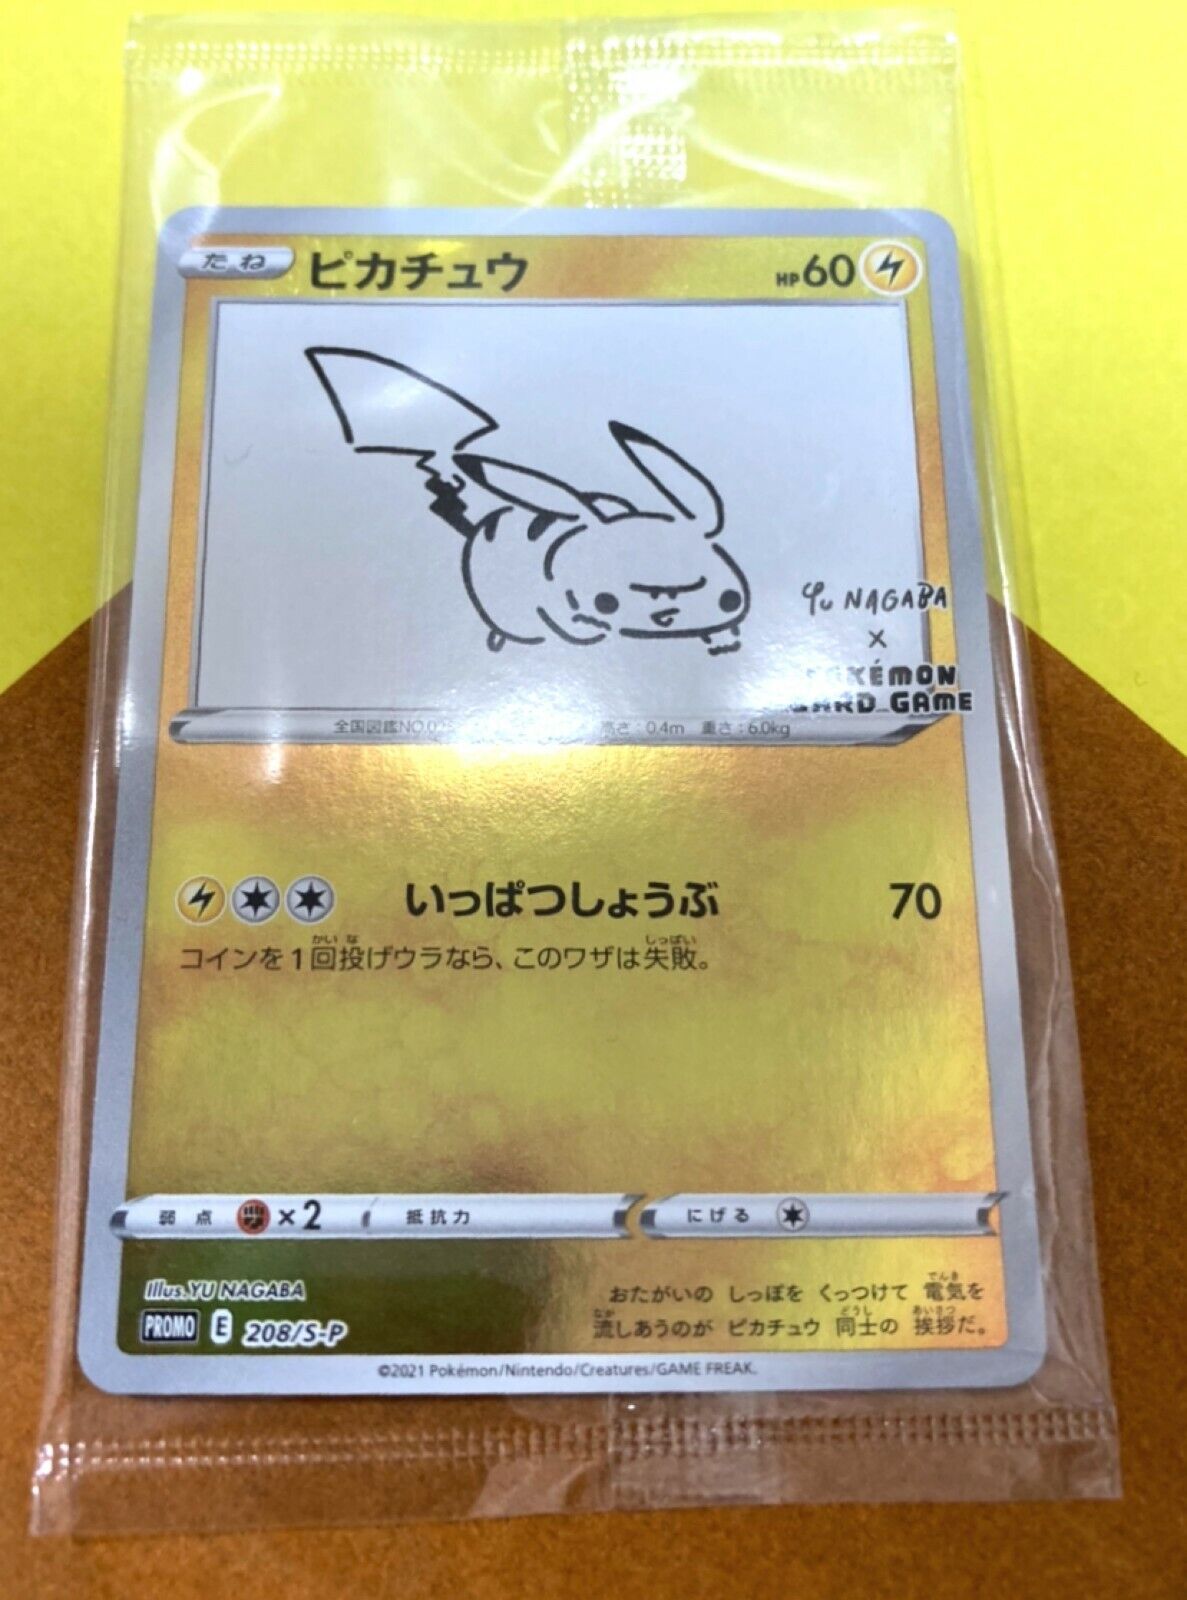 NEW Pikachu promo E 208/s-p Limited YU NAGABA Pokemon Card Game Japanese